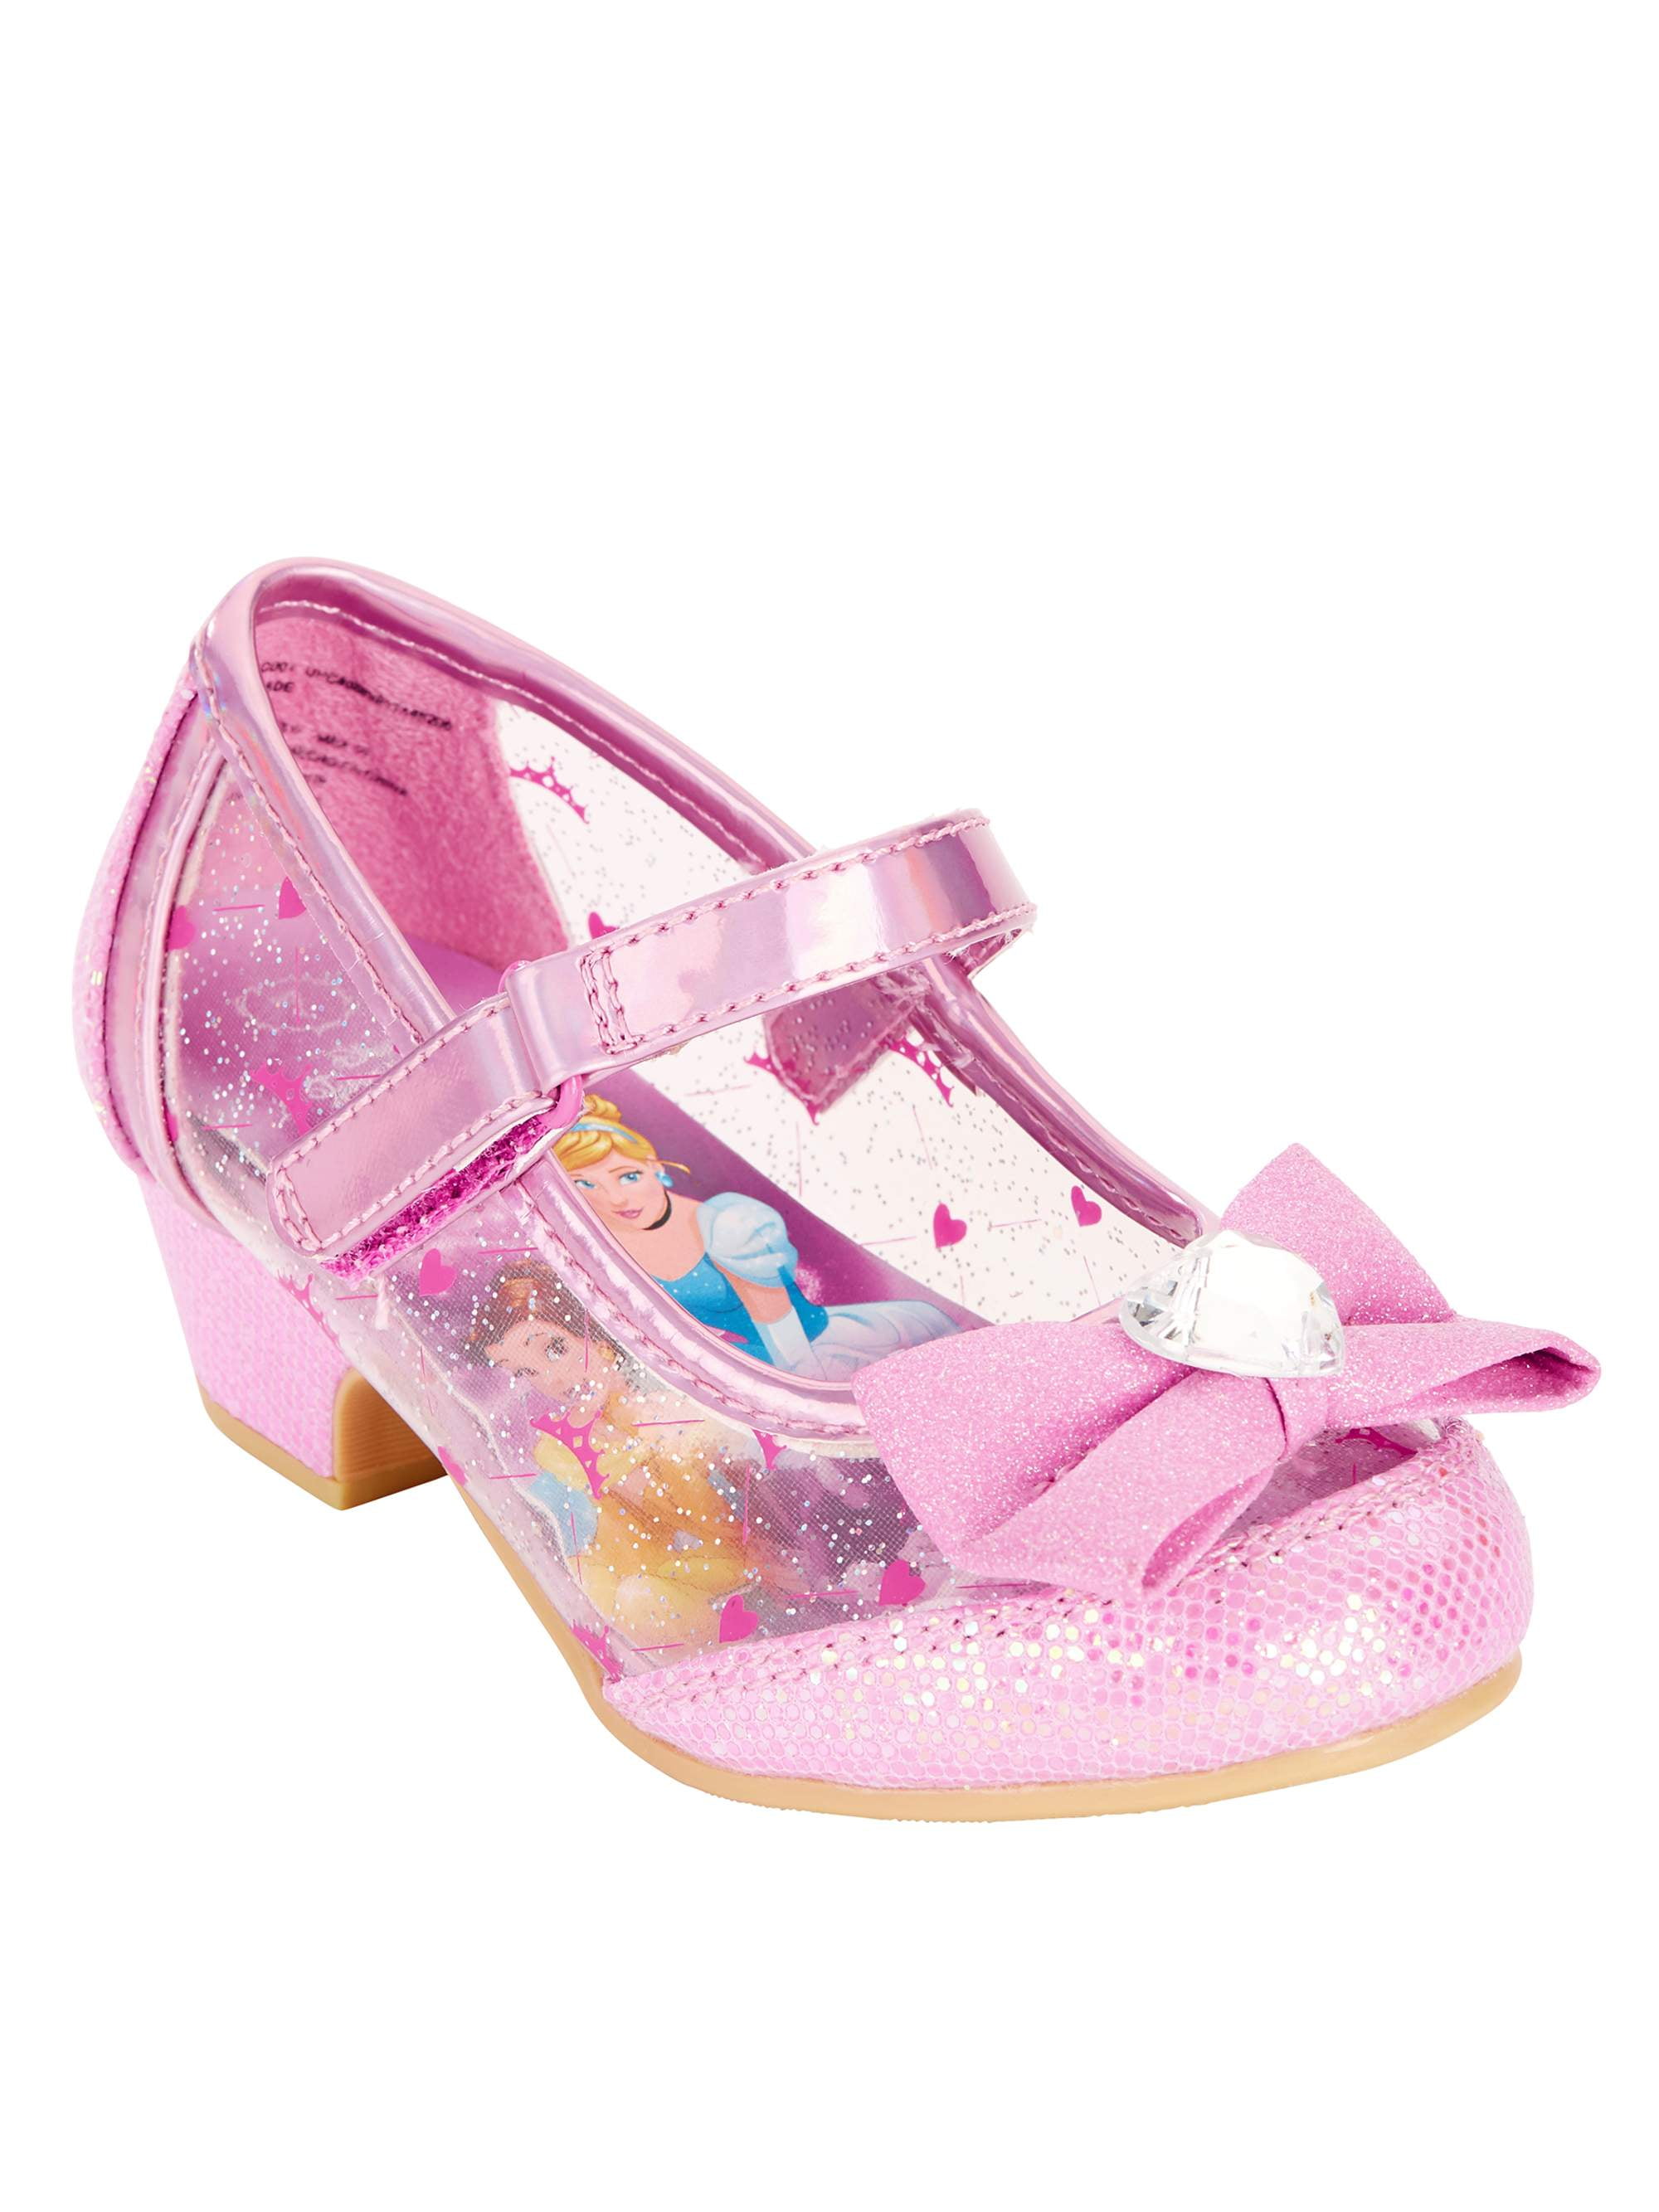 Champagne Preschool Toddler Cute Princess Kids Girls Party Dress Shoes Size 9